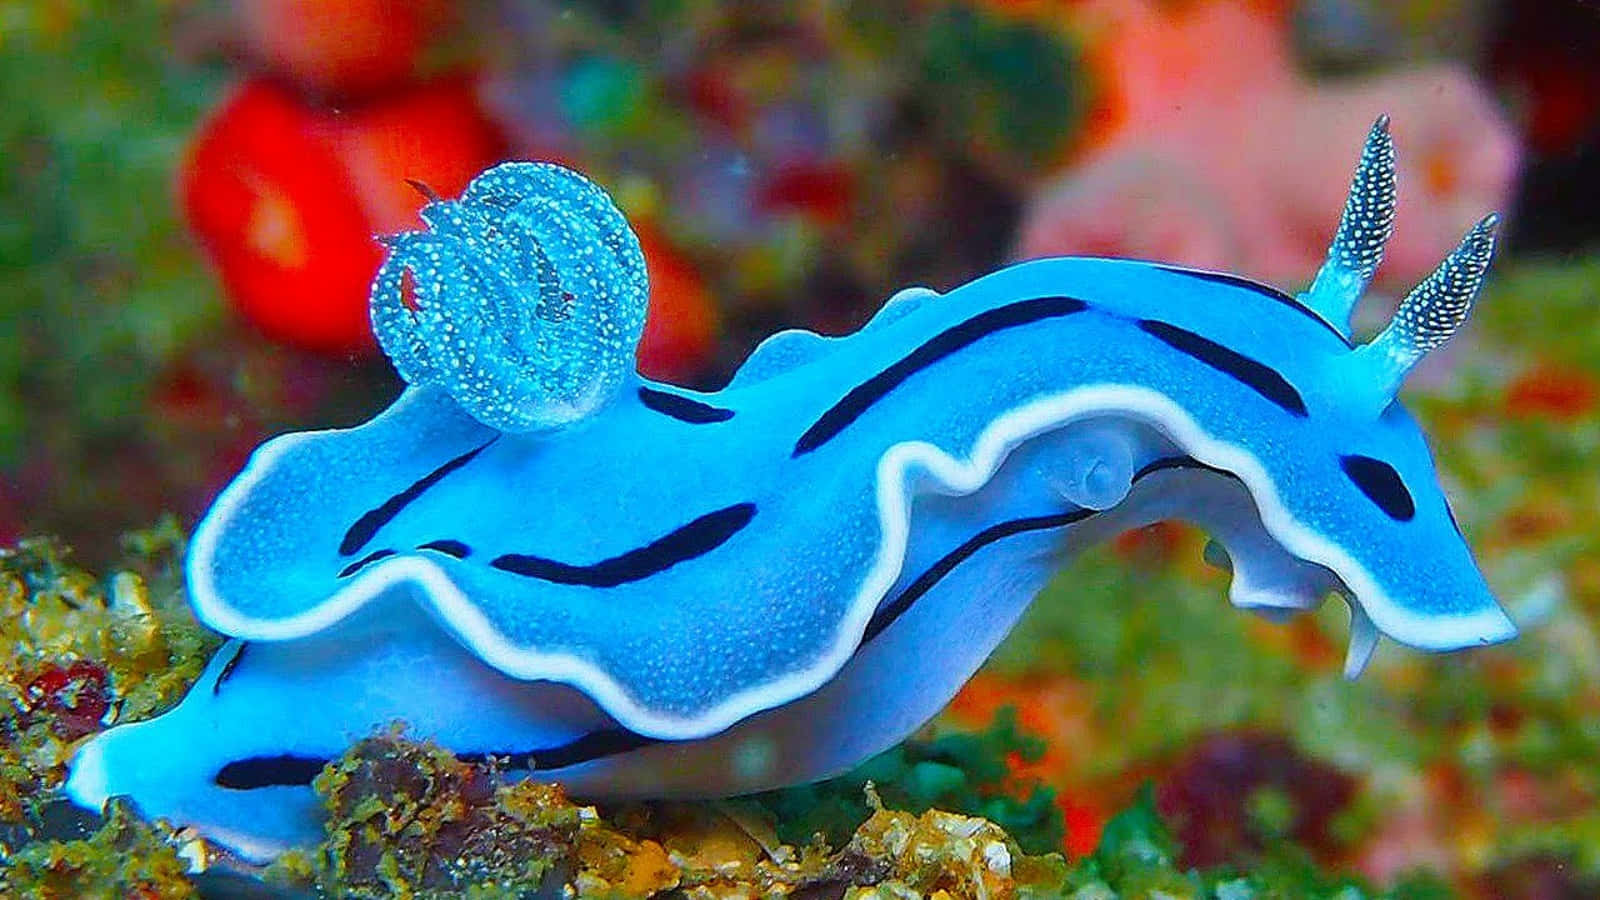 A Blue Slug Swimming In The Ocean